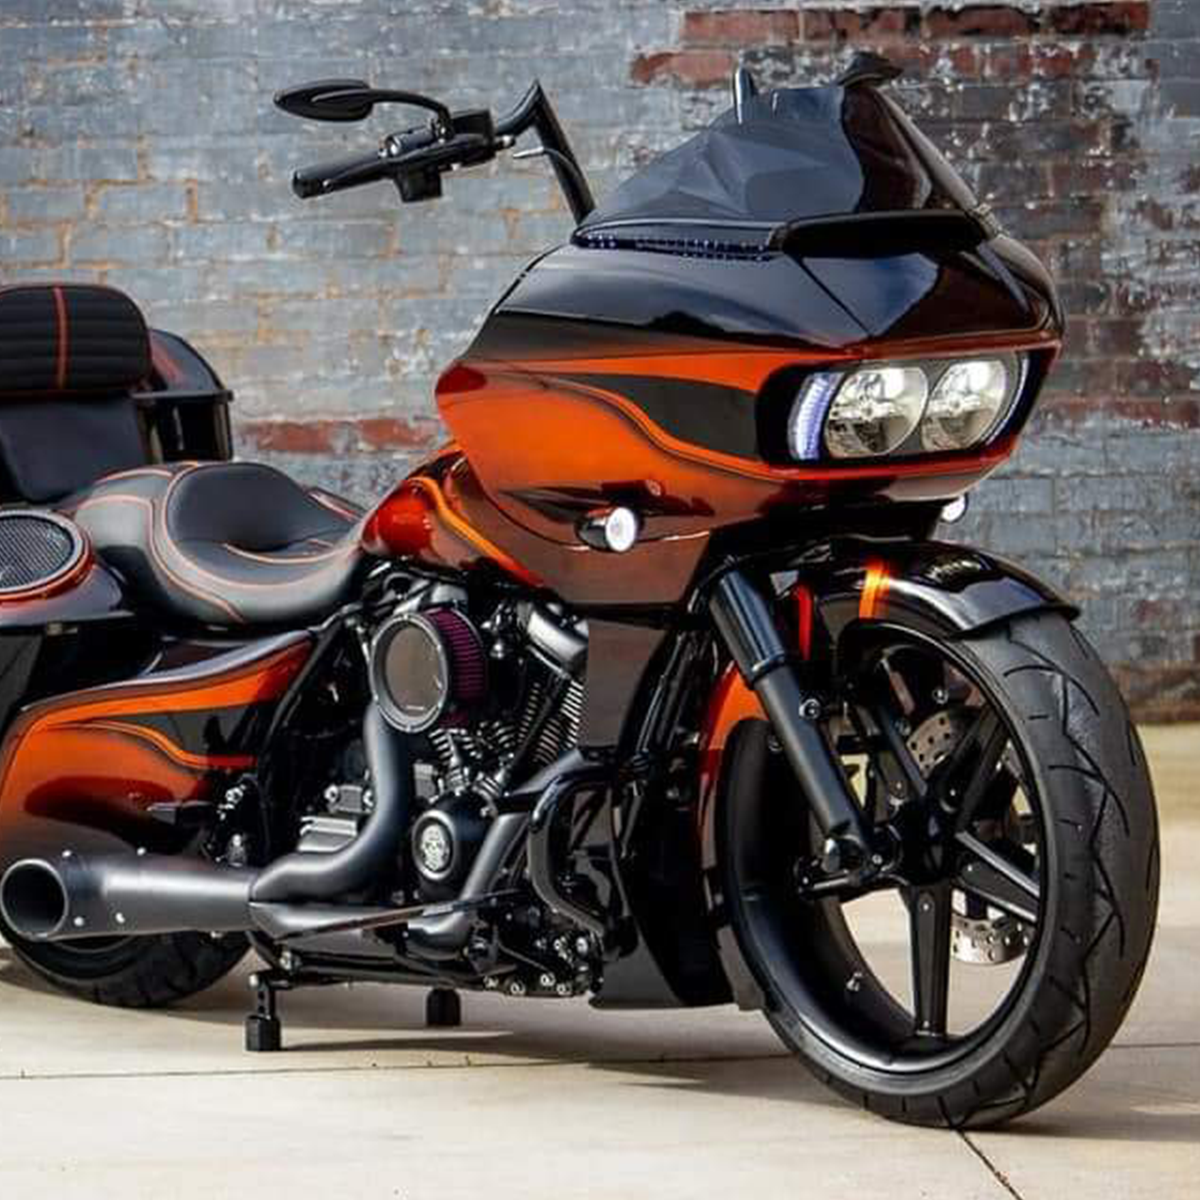 Bulldog custom motorcycle wheel gallery image